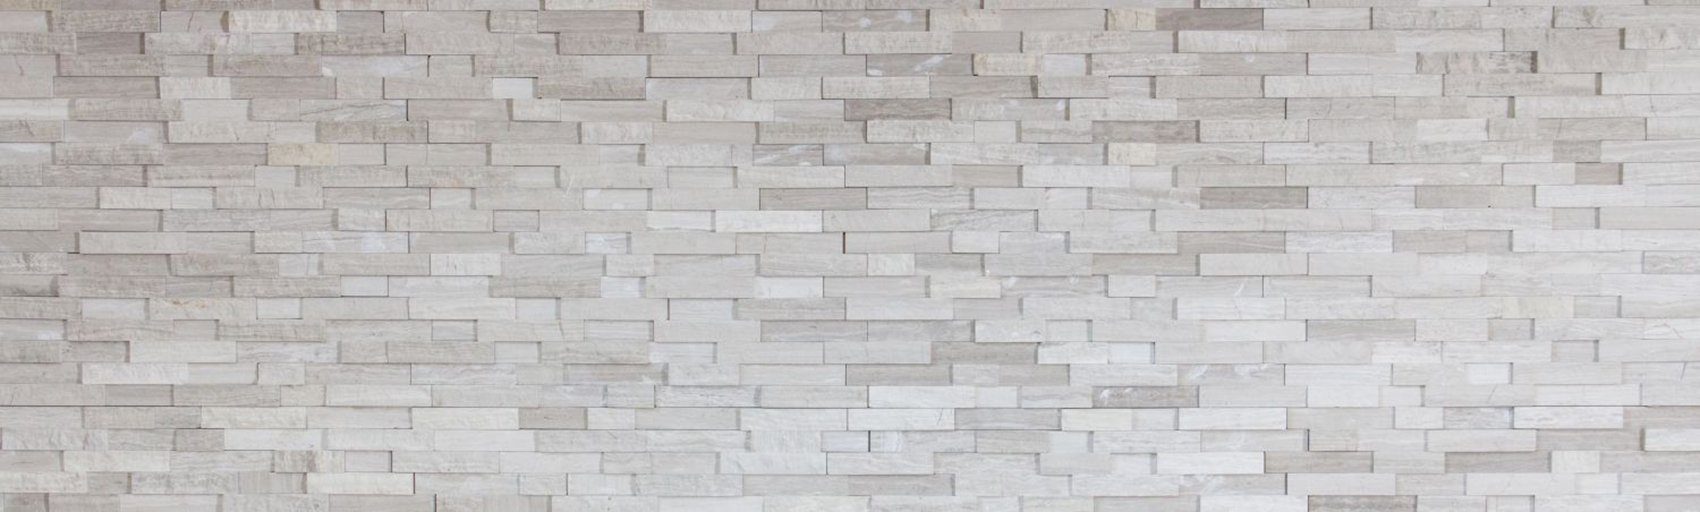 Mosani Mosaikfliesen Brick Steinwand Streifen Splitface Naturstein Marmor hellgrau Mosaik